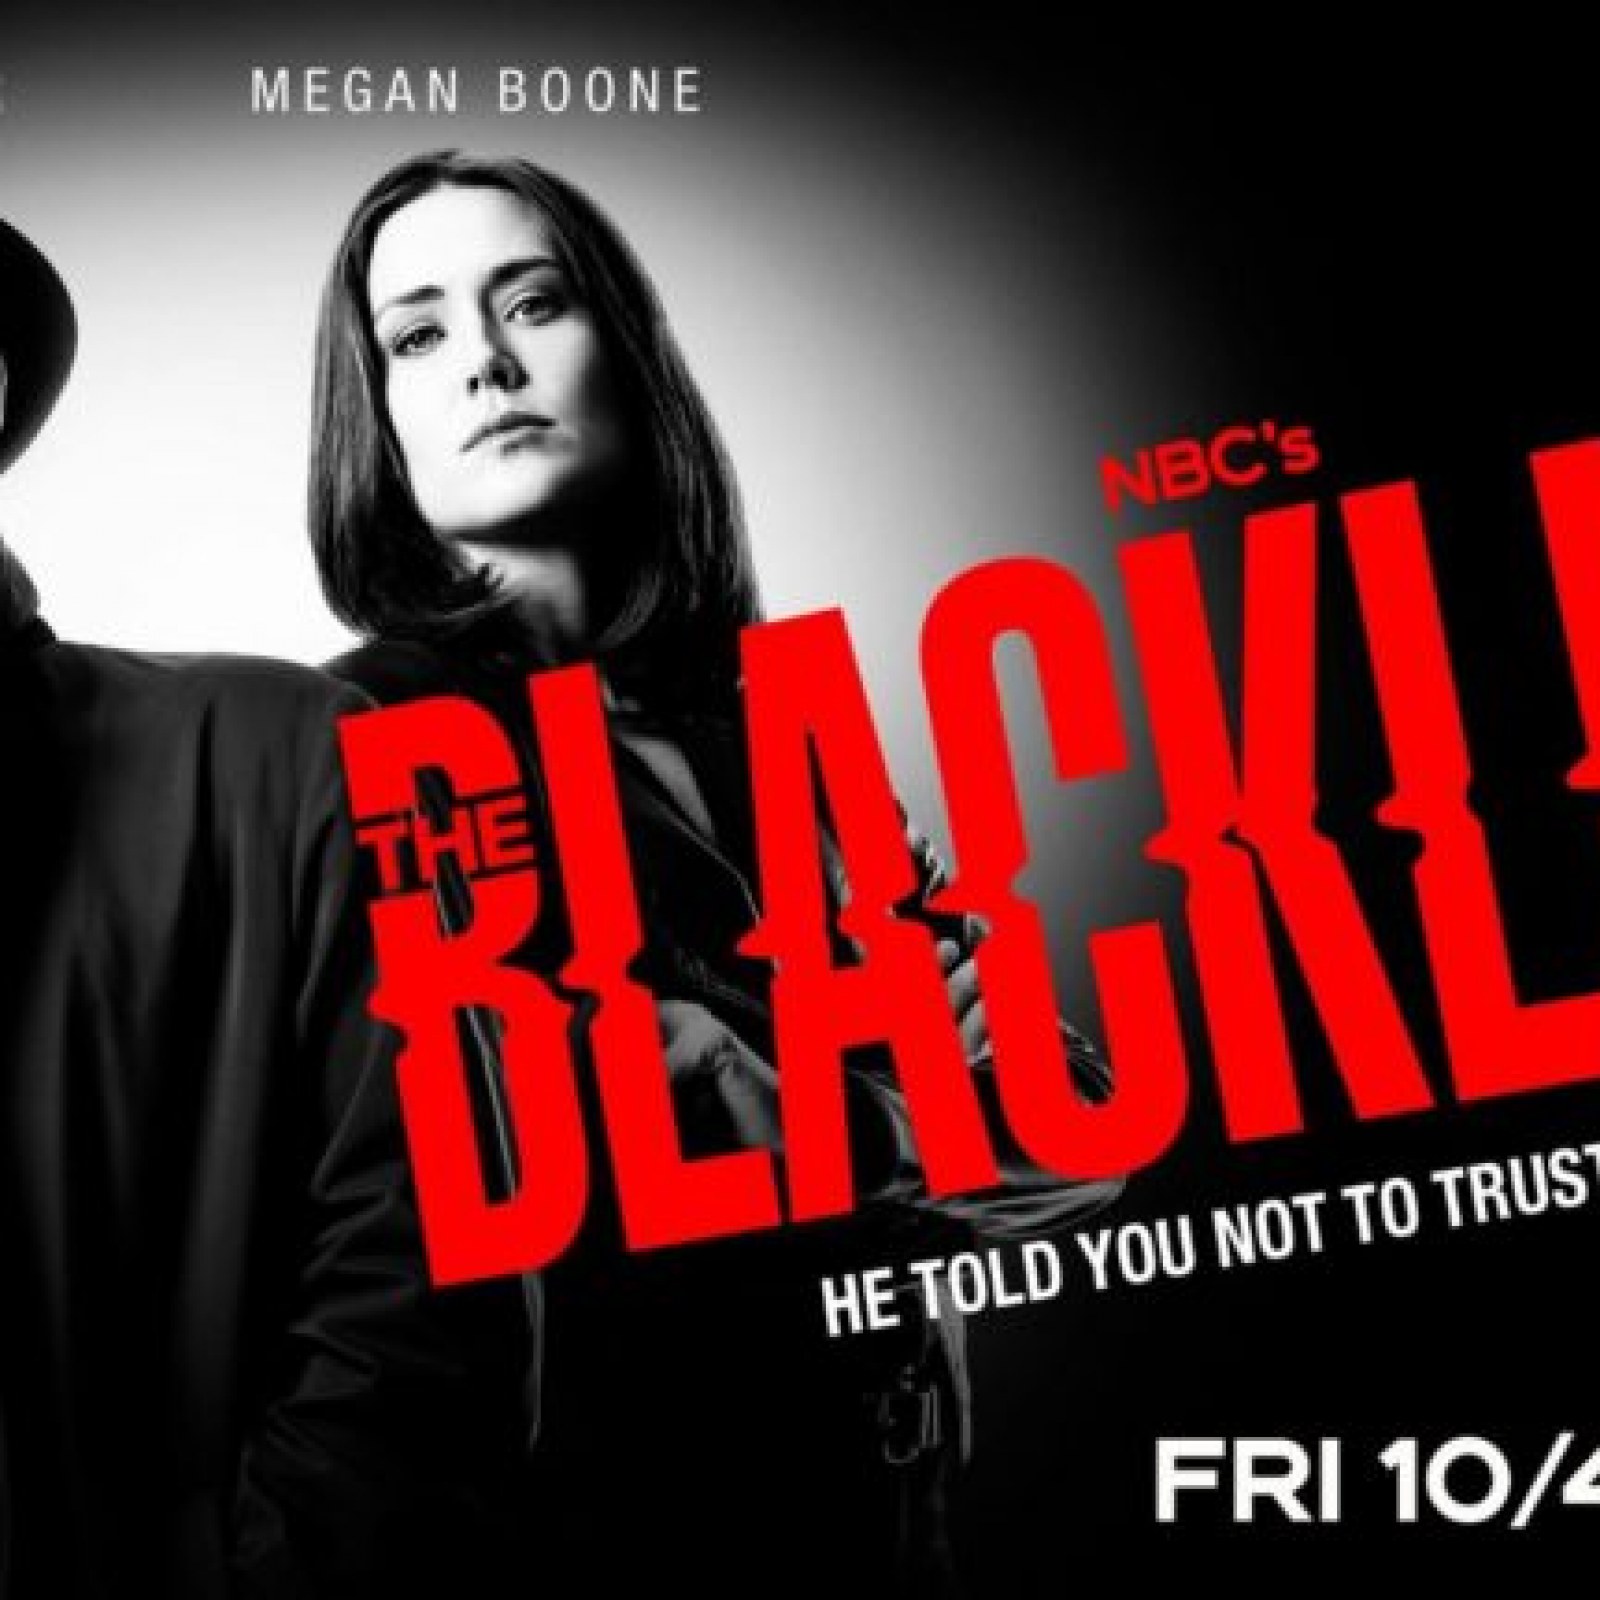 The Blacklist Season 7 Release Date Cast Trailer Plot What